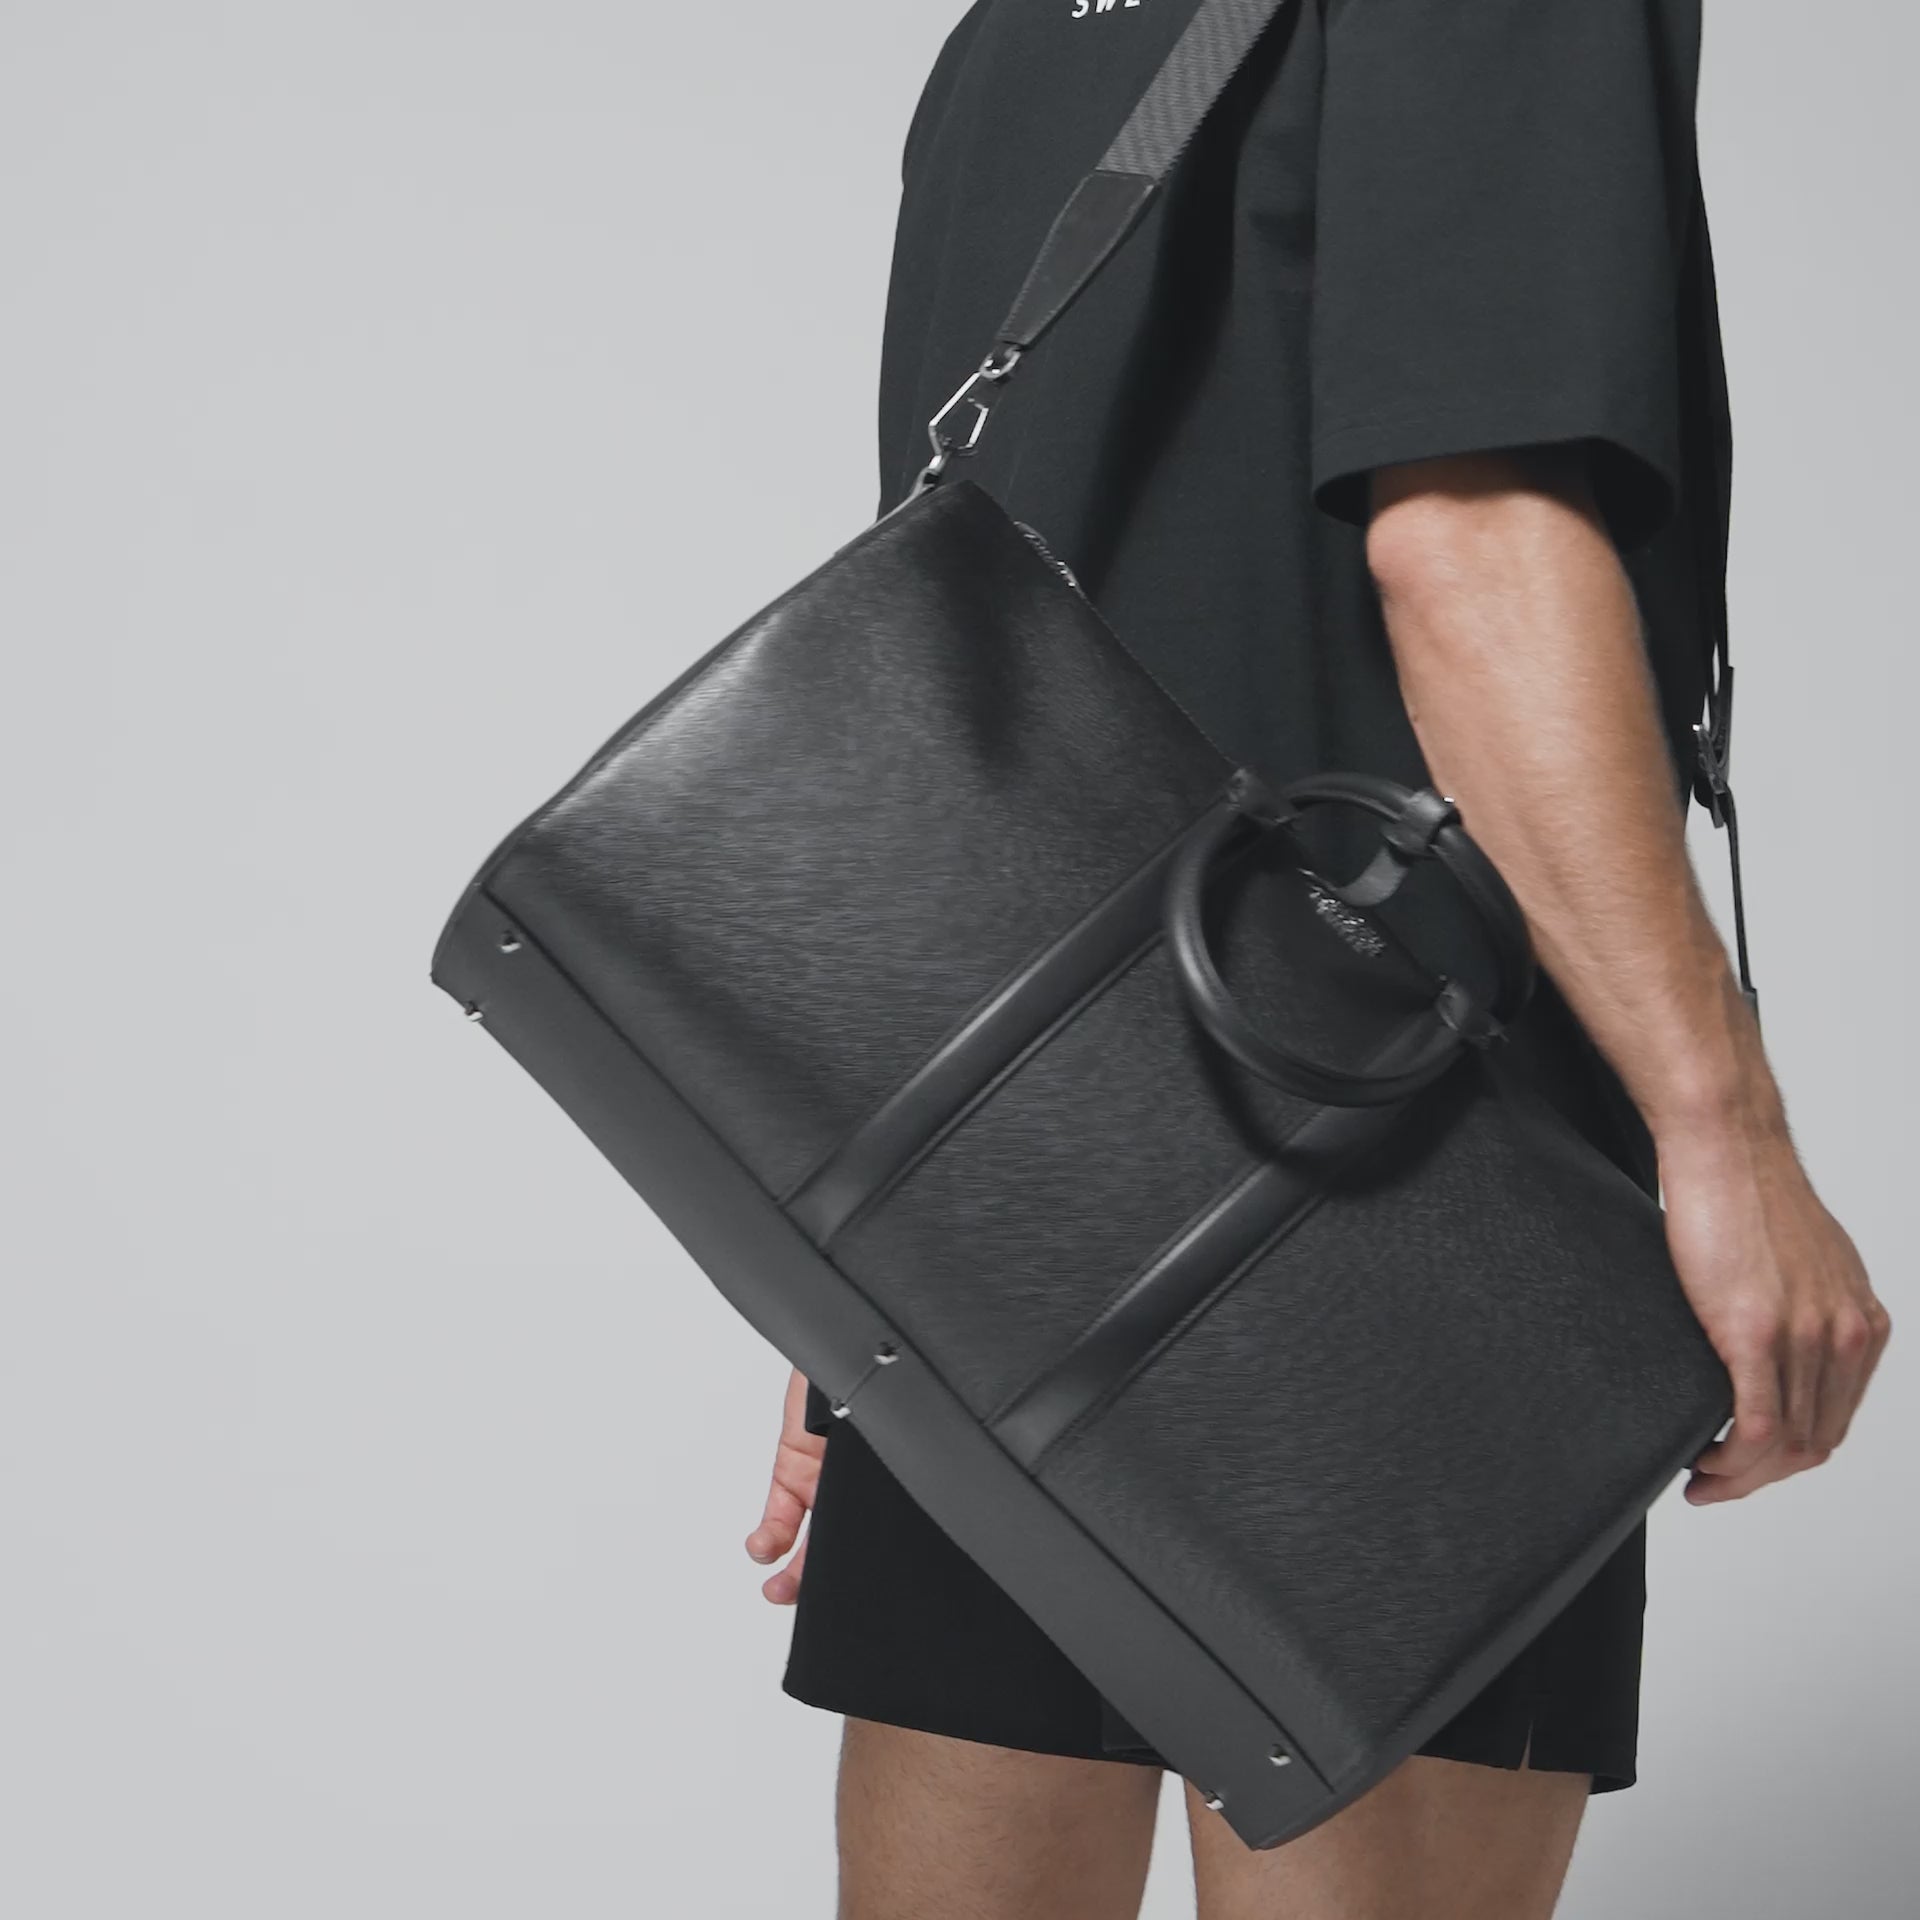 Golden Concept - 皮革包 - 行李袋（Saffiano 皮革）